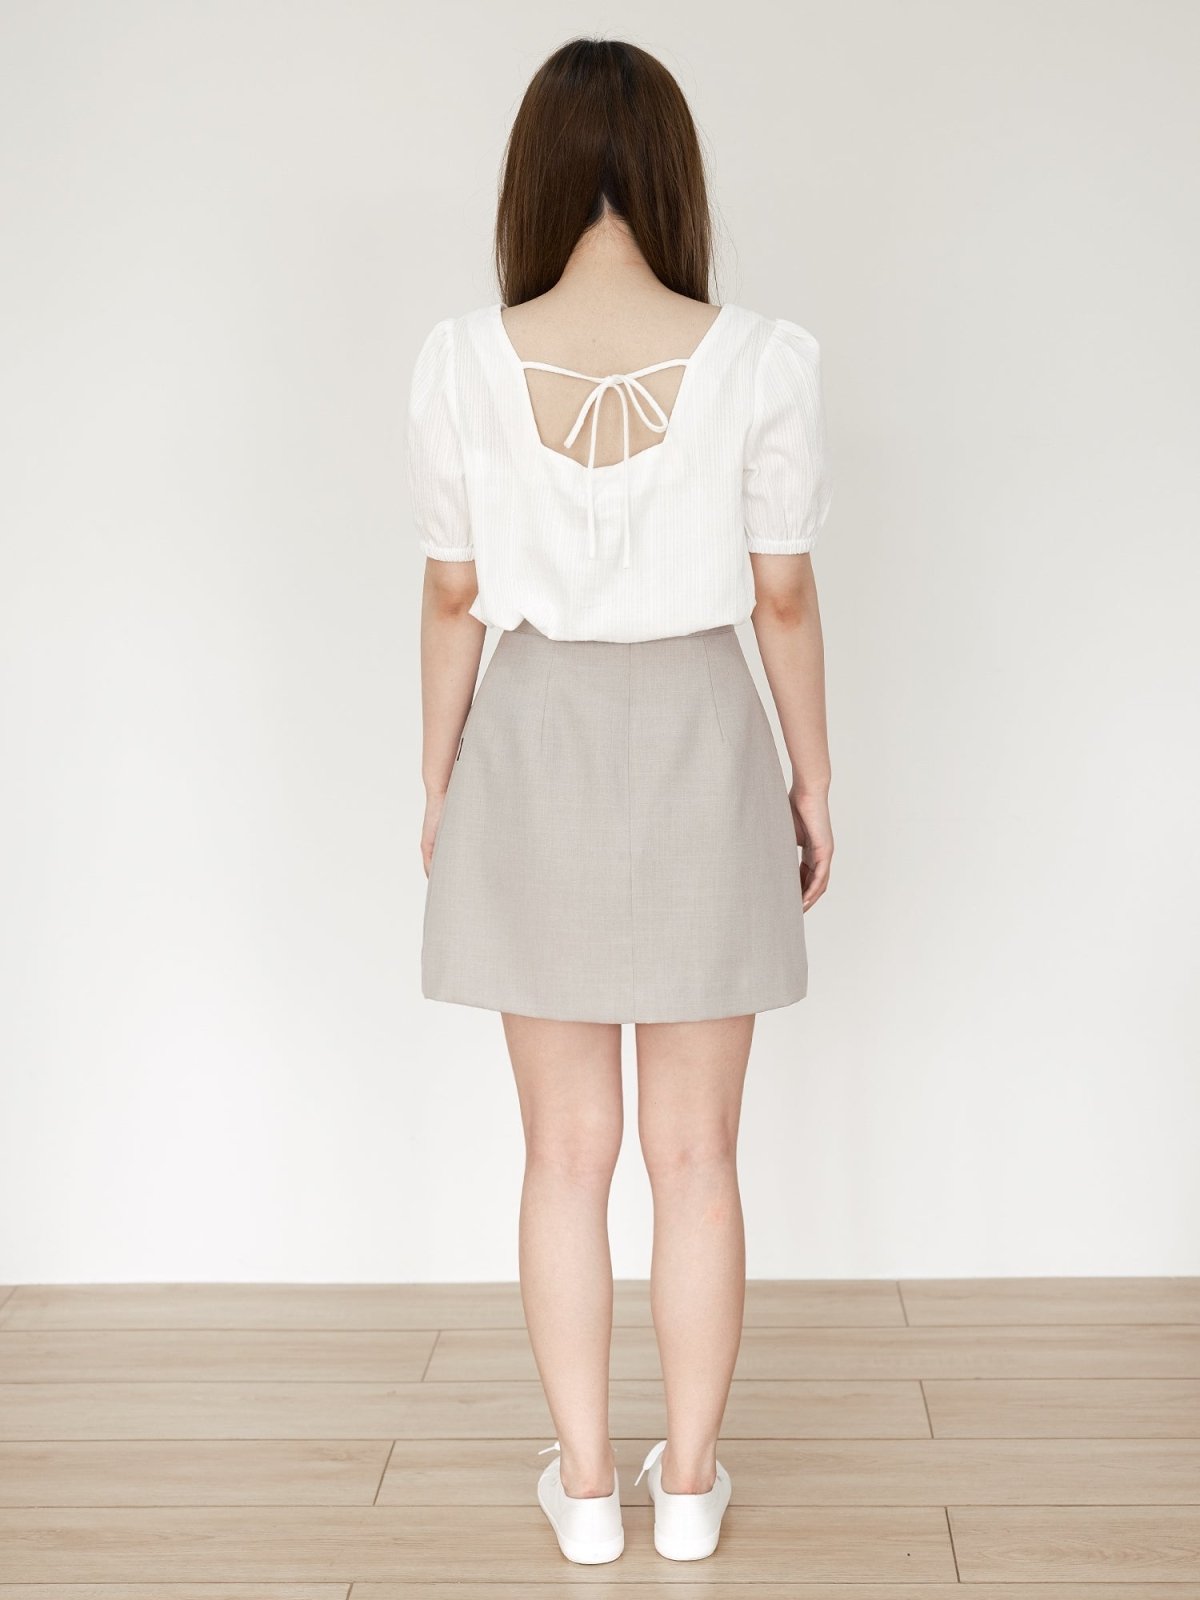 Harper Summer Buckle Pleated Skirt - DAG-DD0067-23LightBeigeS - Light Beige - S - D'ZAGE Designs